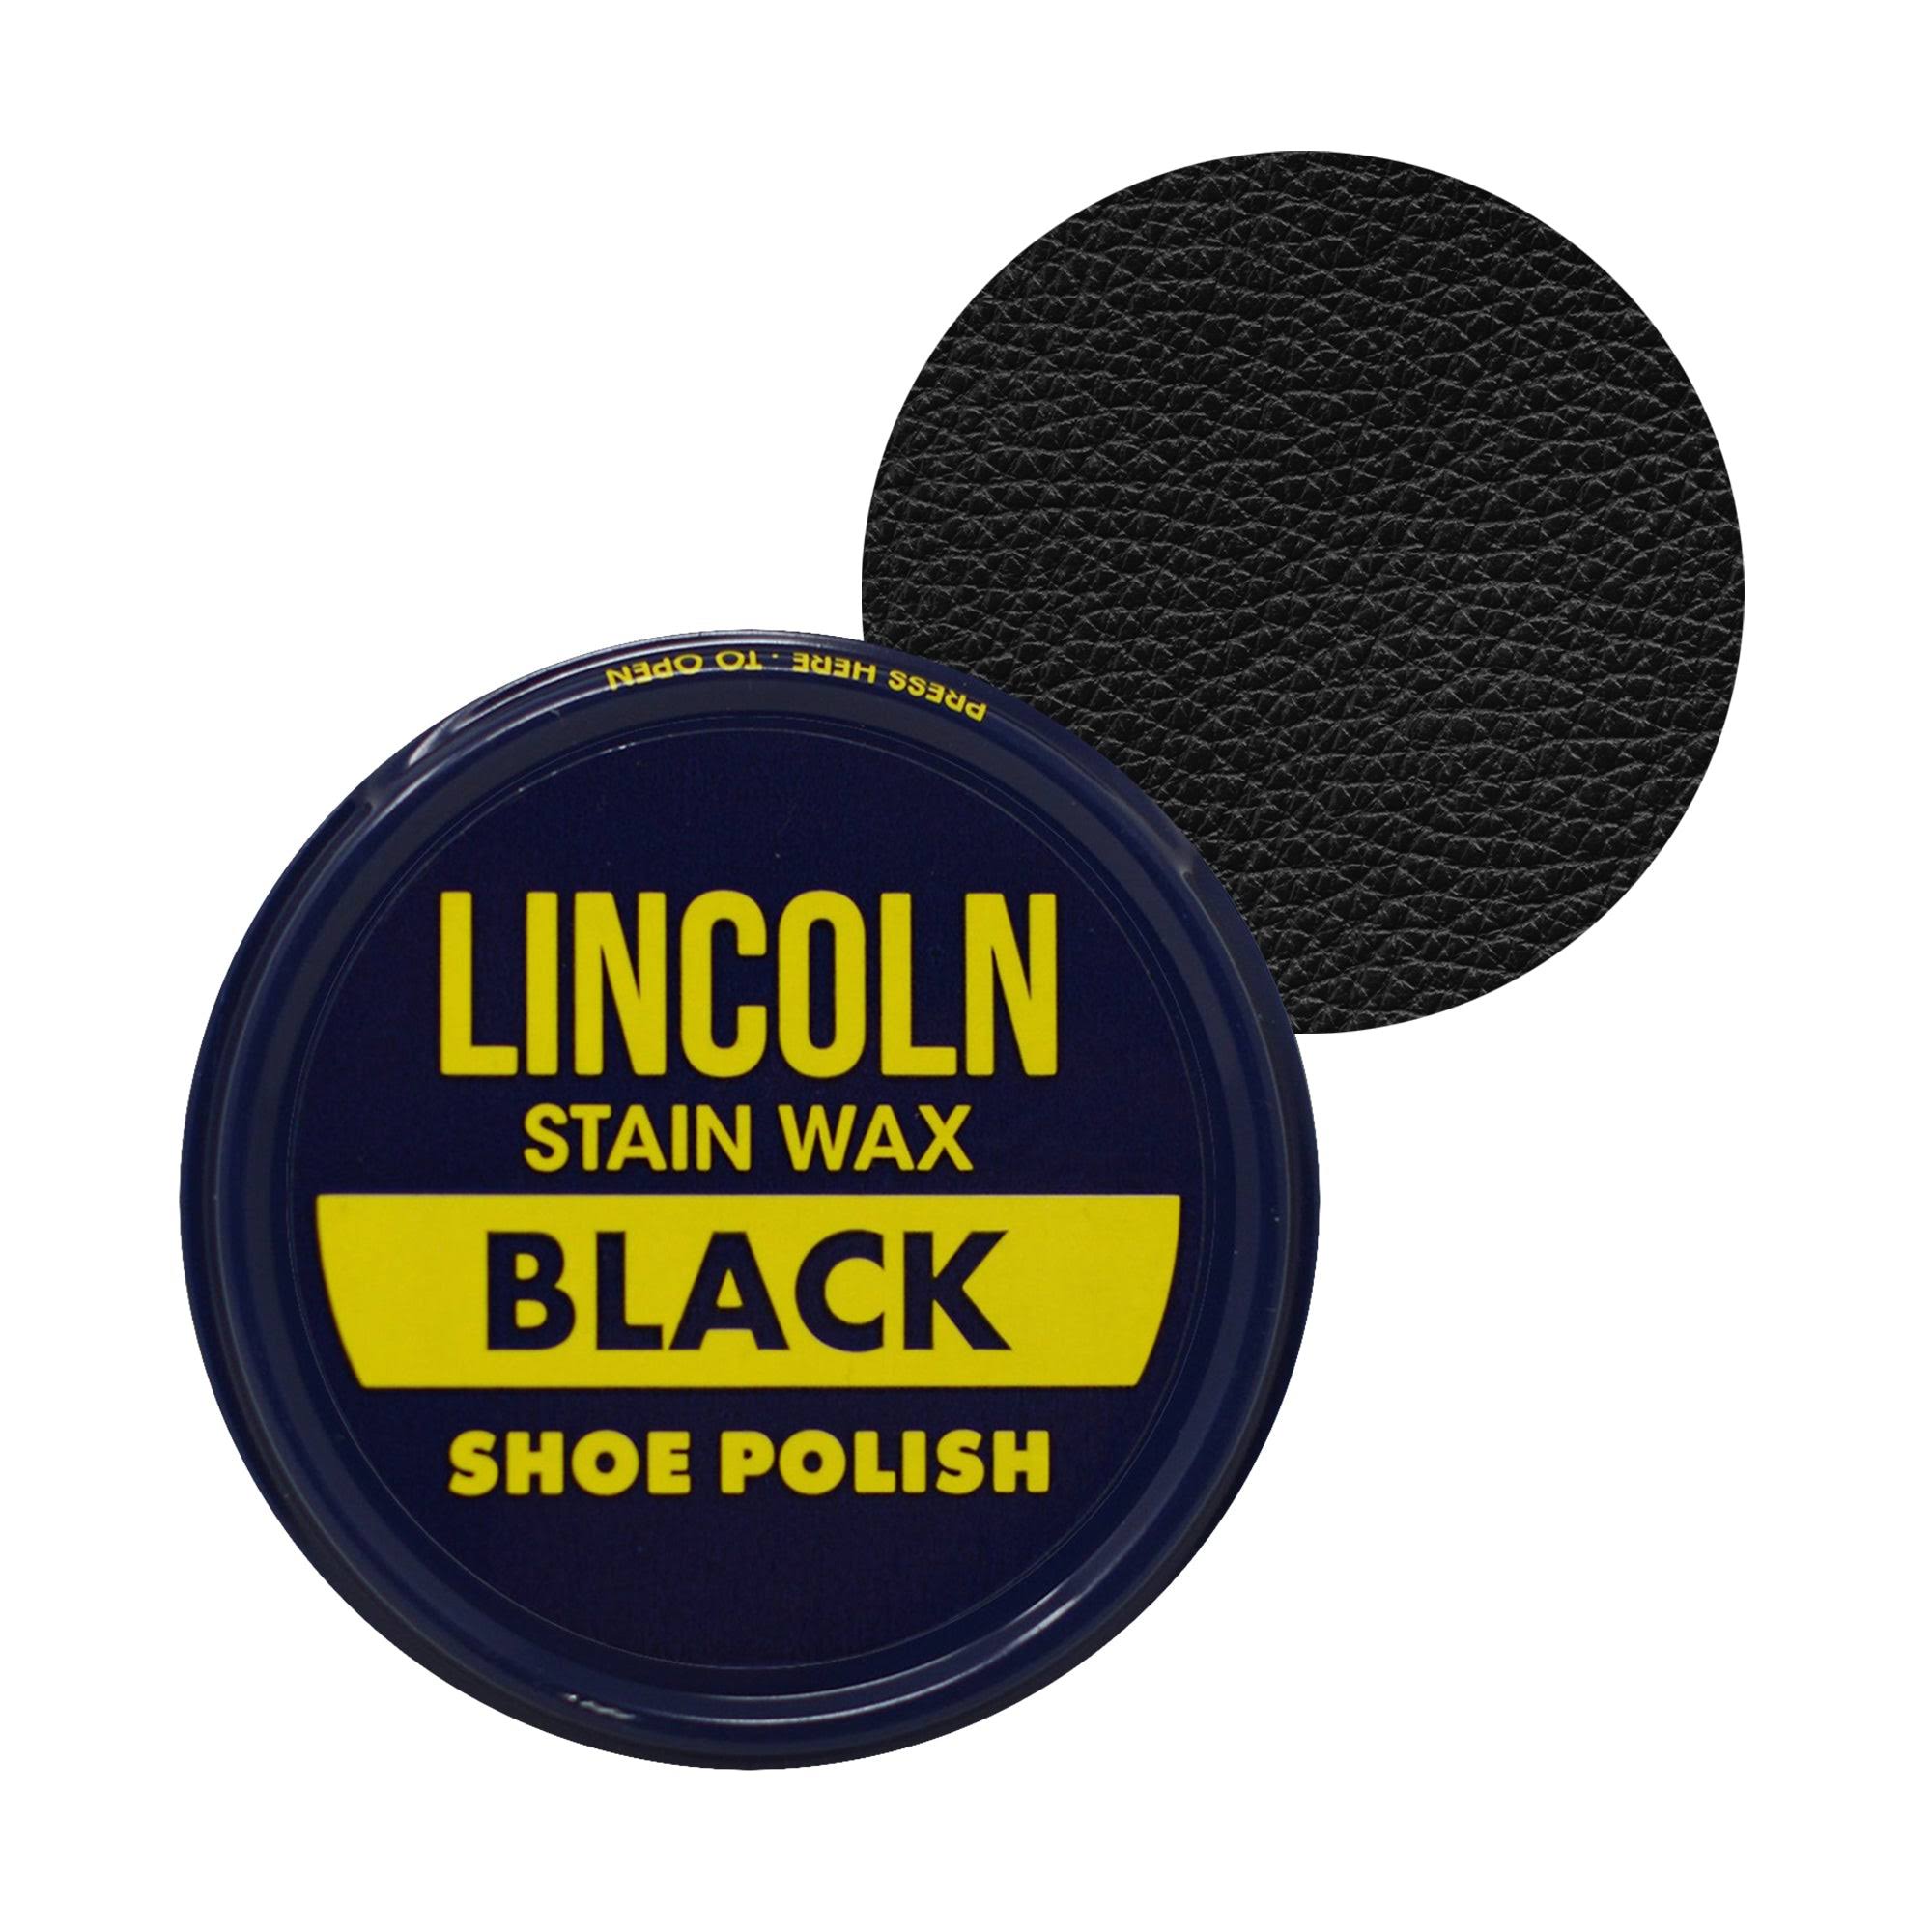 Lincoln Stain Wax Black Shoe Polish - Black, 3oz, 2pk